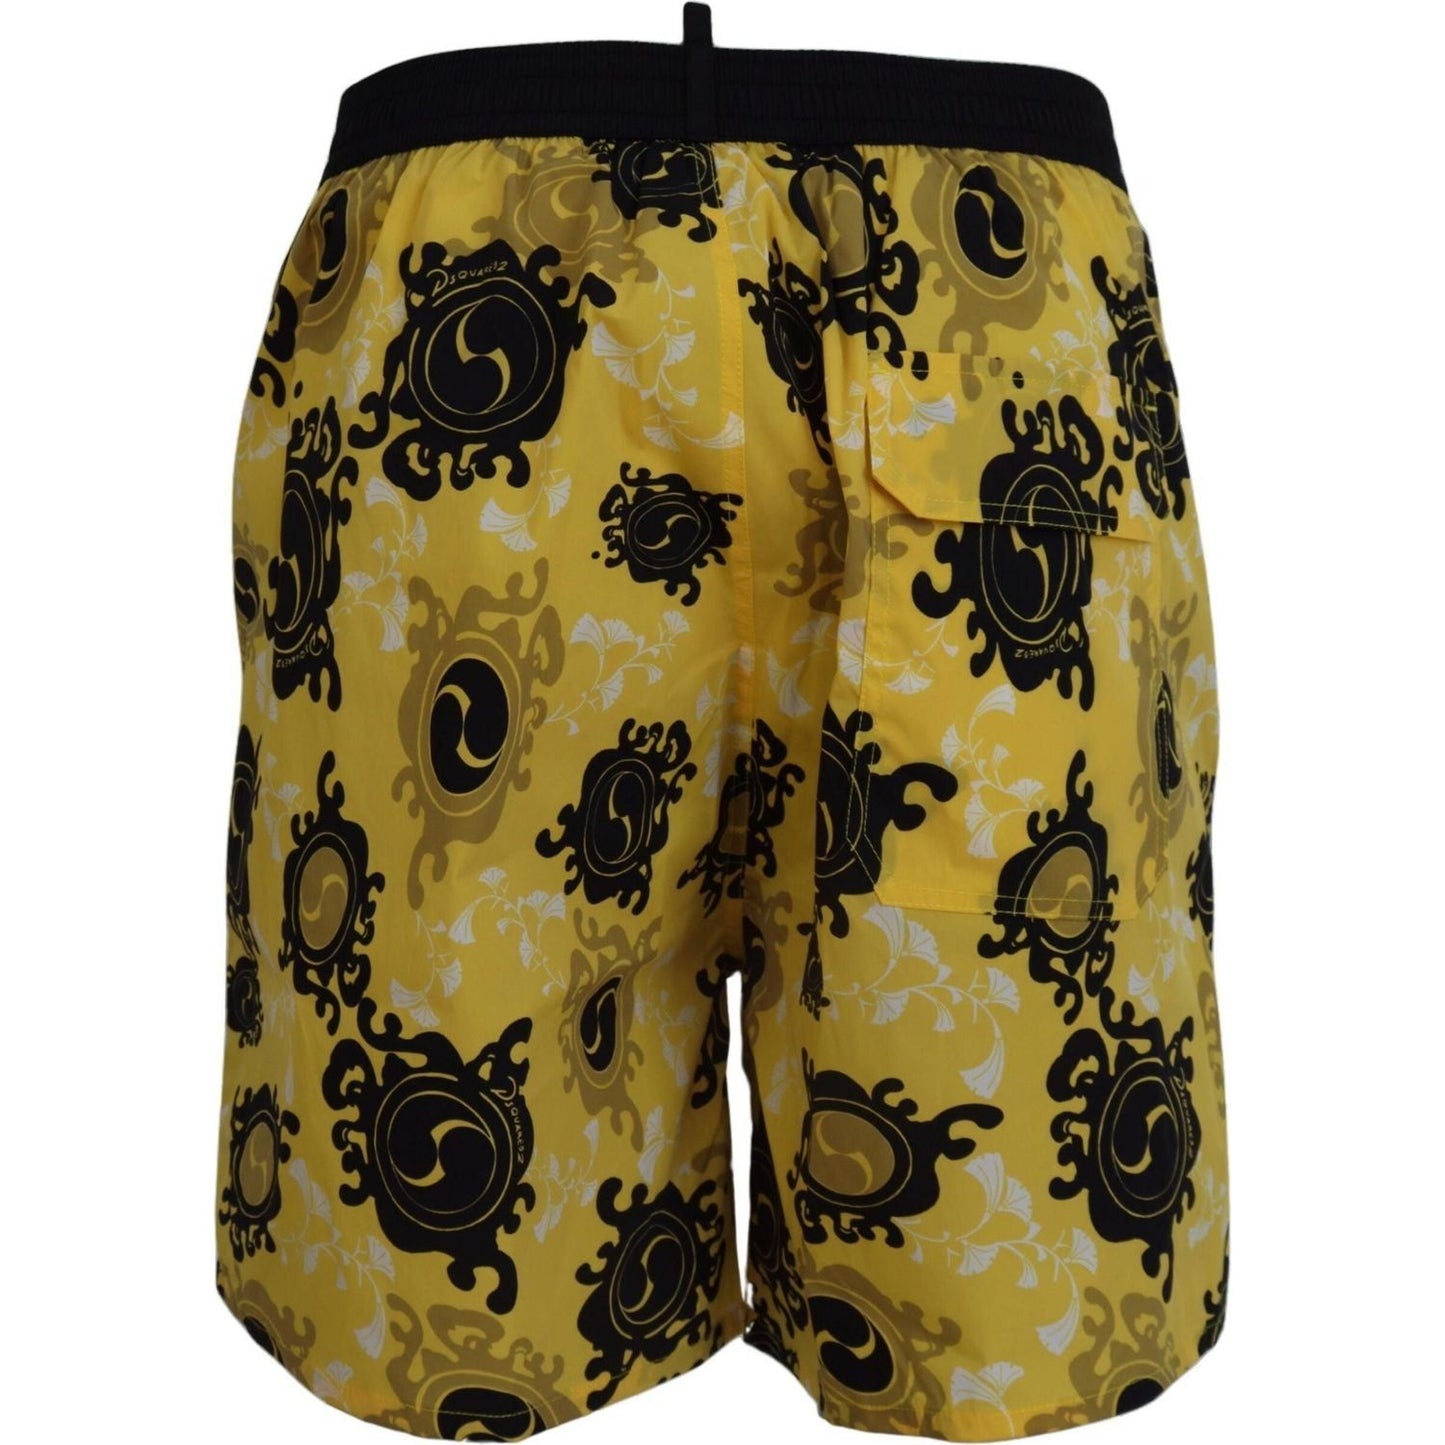 Dsquared² Yellow Block Print Swim Shorts Boxer yellow-black-printed-men-beachwear-shorts-swimwear IMG_5981-scaled-c61d1ad3-3d8.jpg